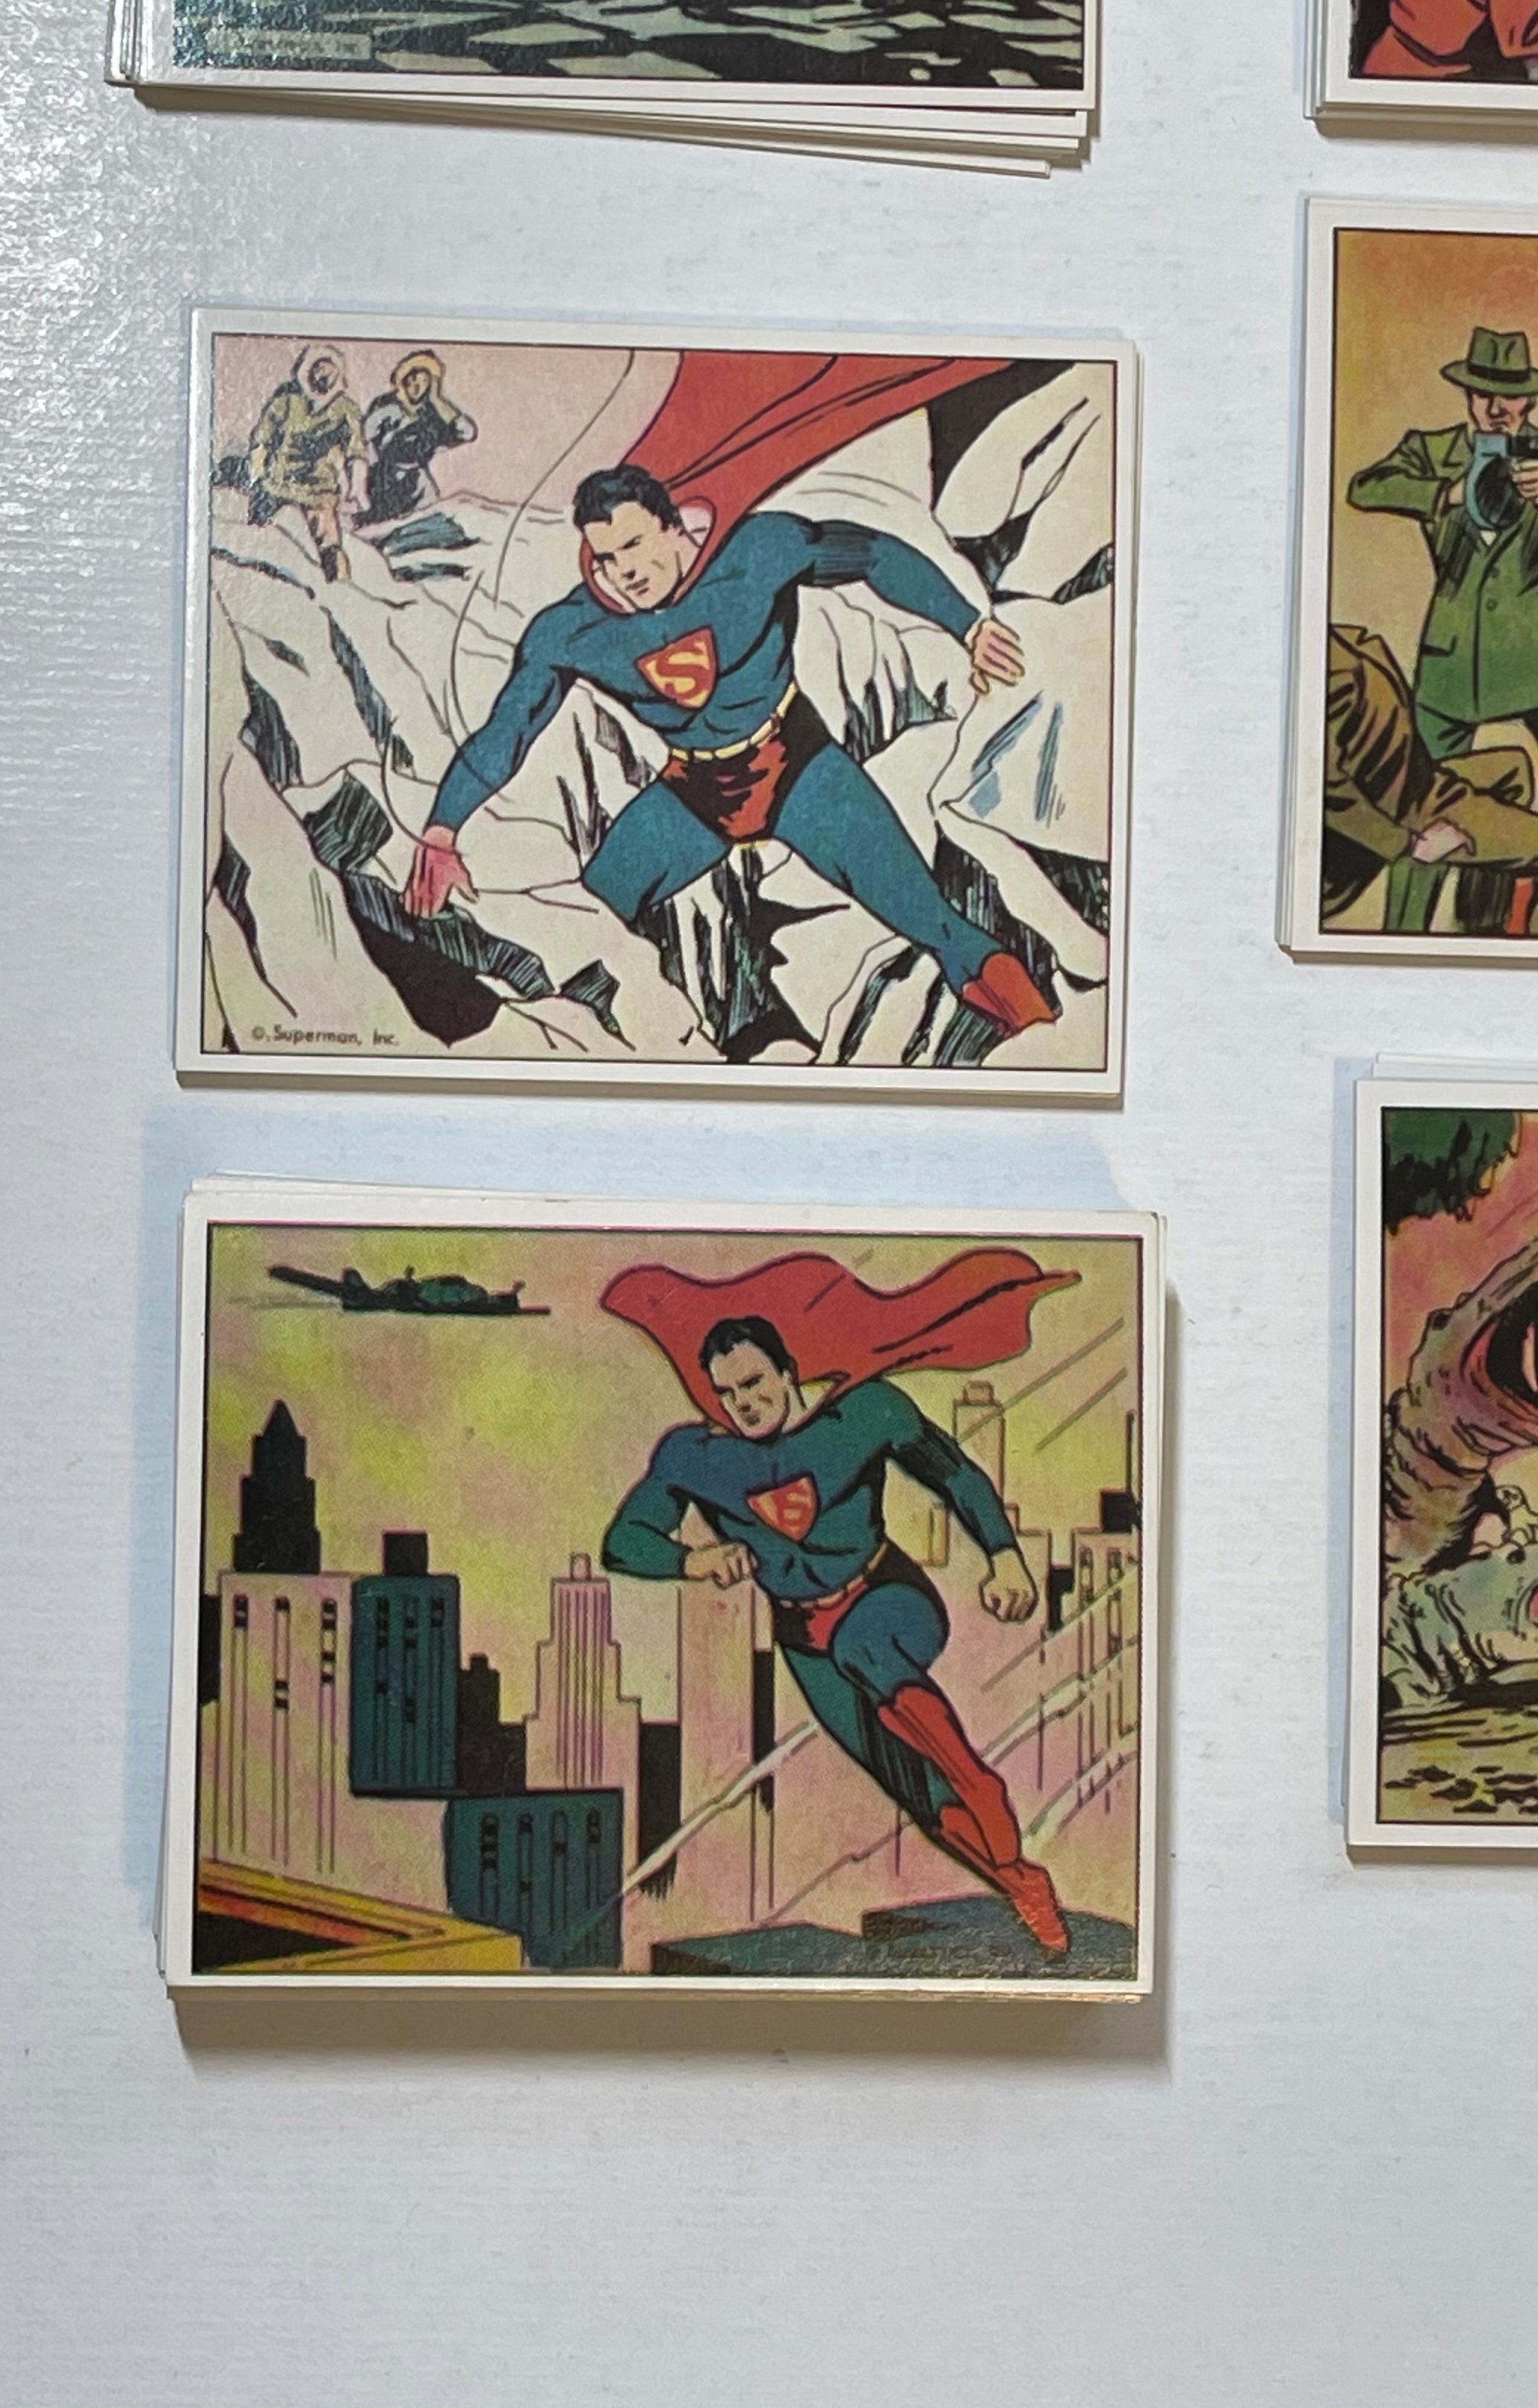 Superman 1940 comics cards rare reprint set 1984